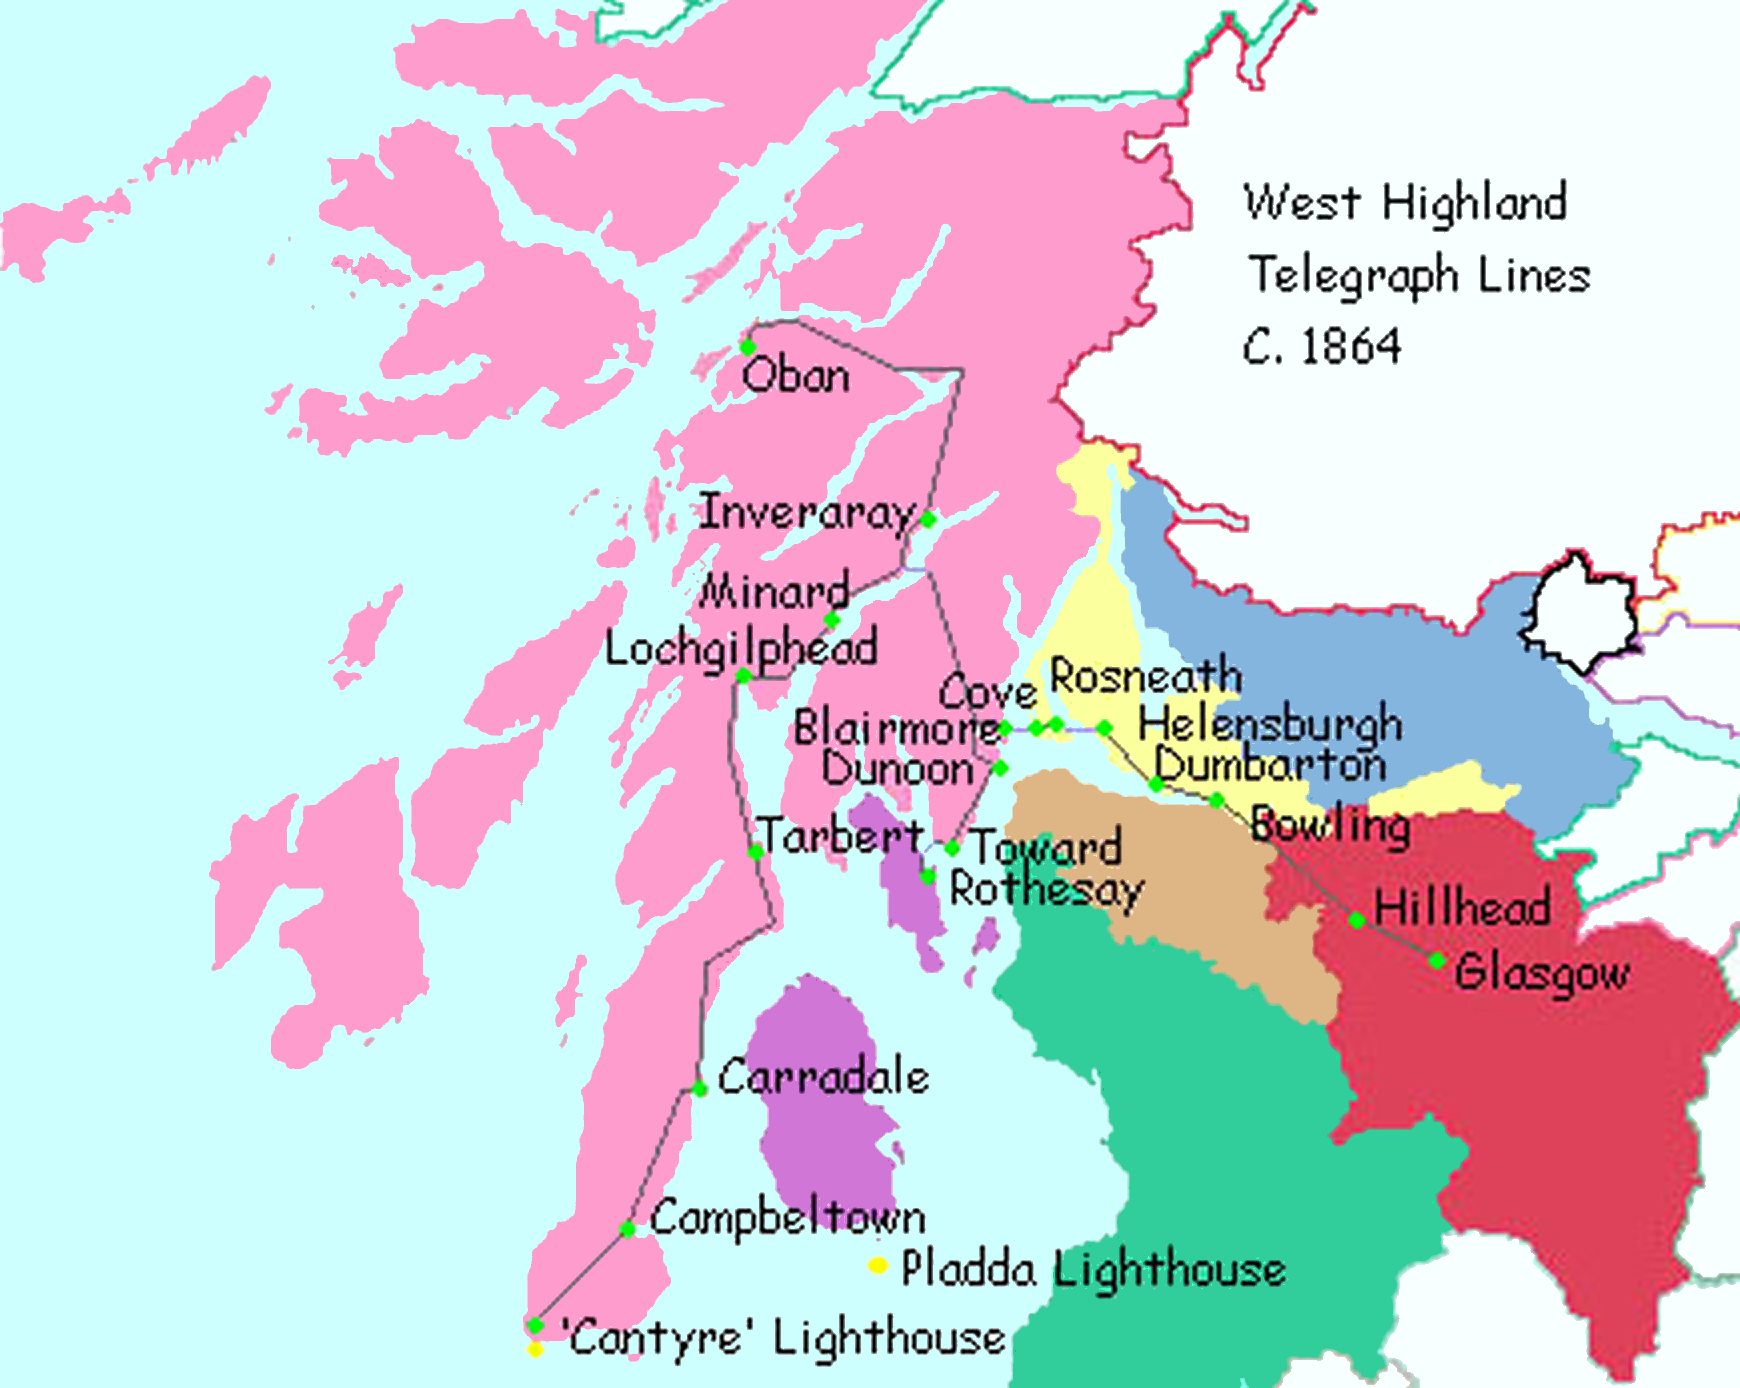 West Highland Telegraph system map